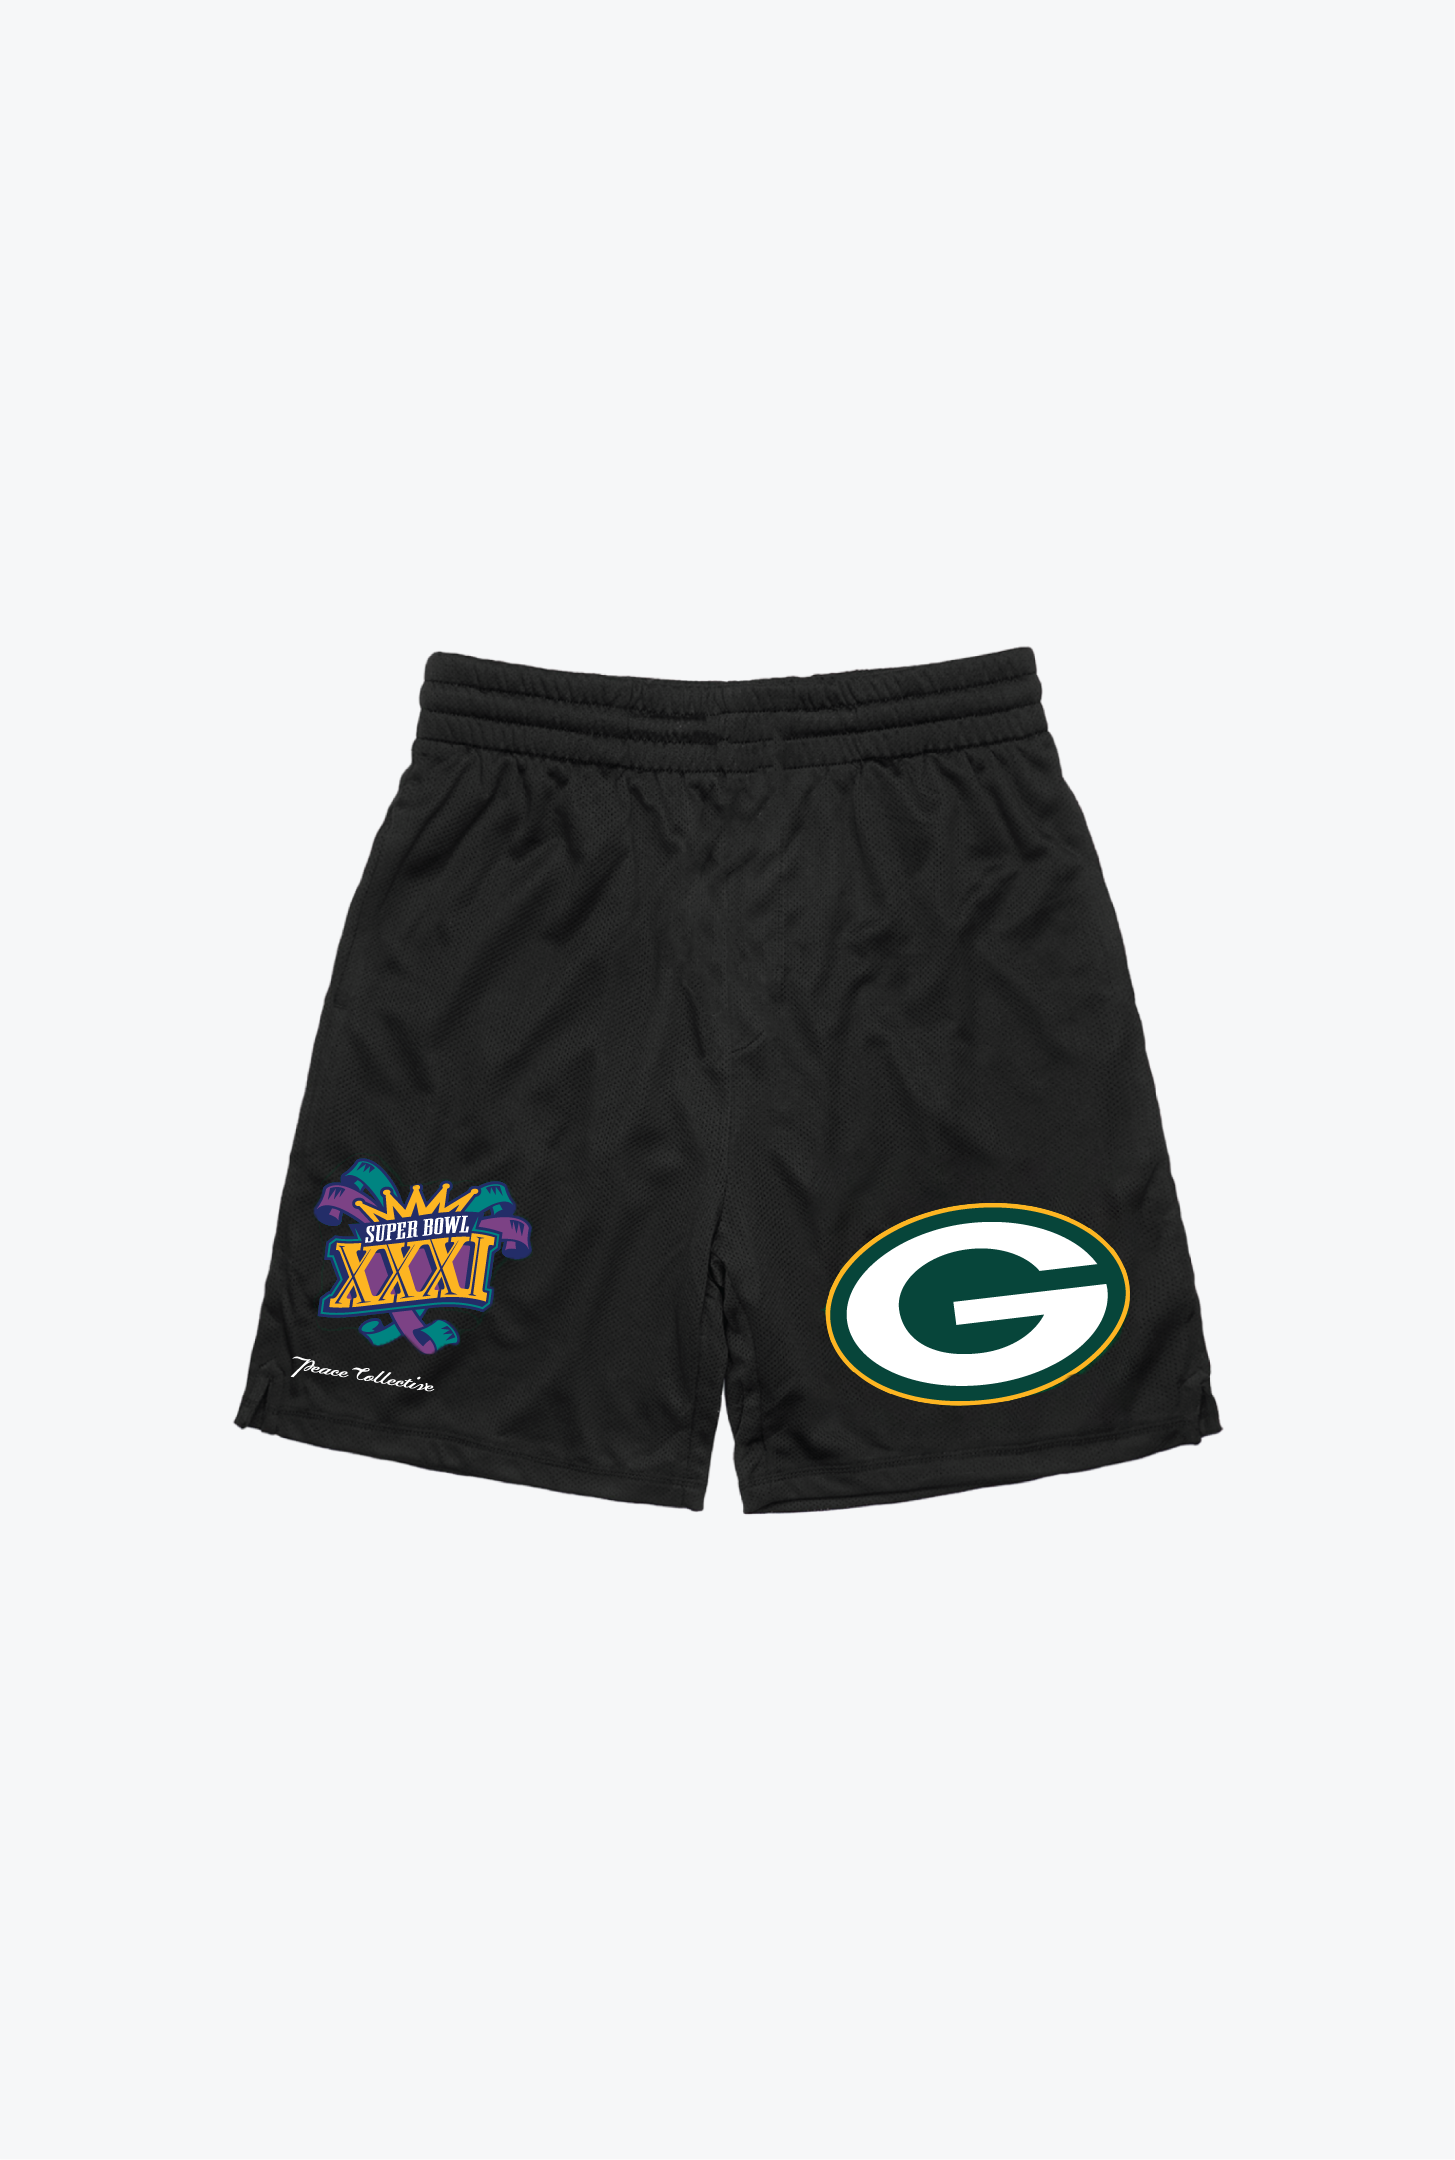 Green Bay Packers Super Bowl XXXI Mesh Shorts - Black